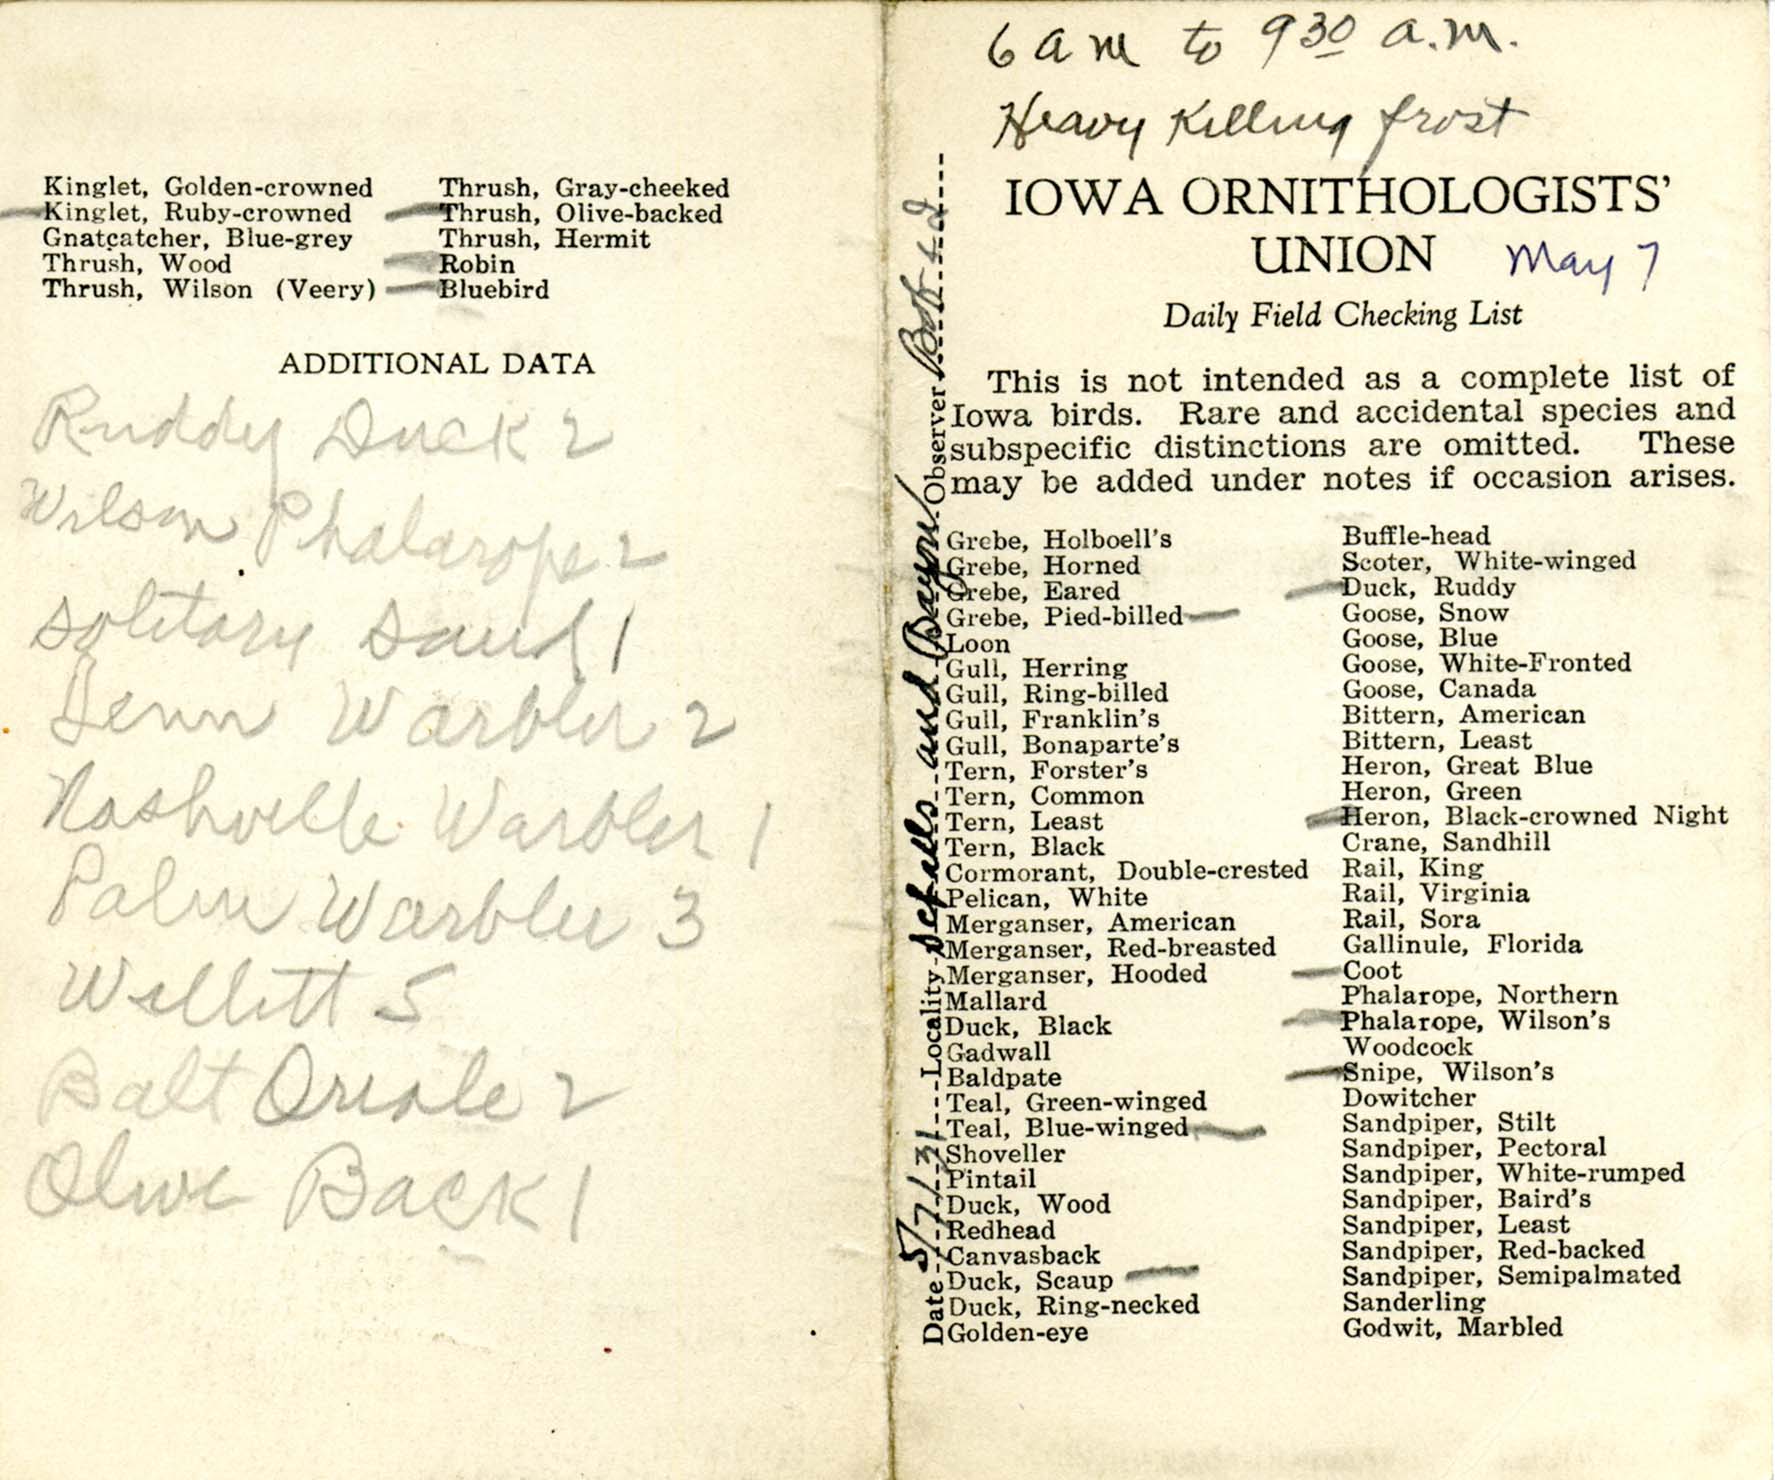 Daily field checking list, Walter Rosene, May 7, 1931